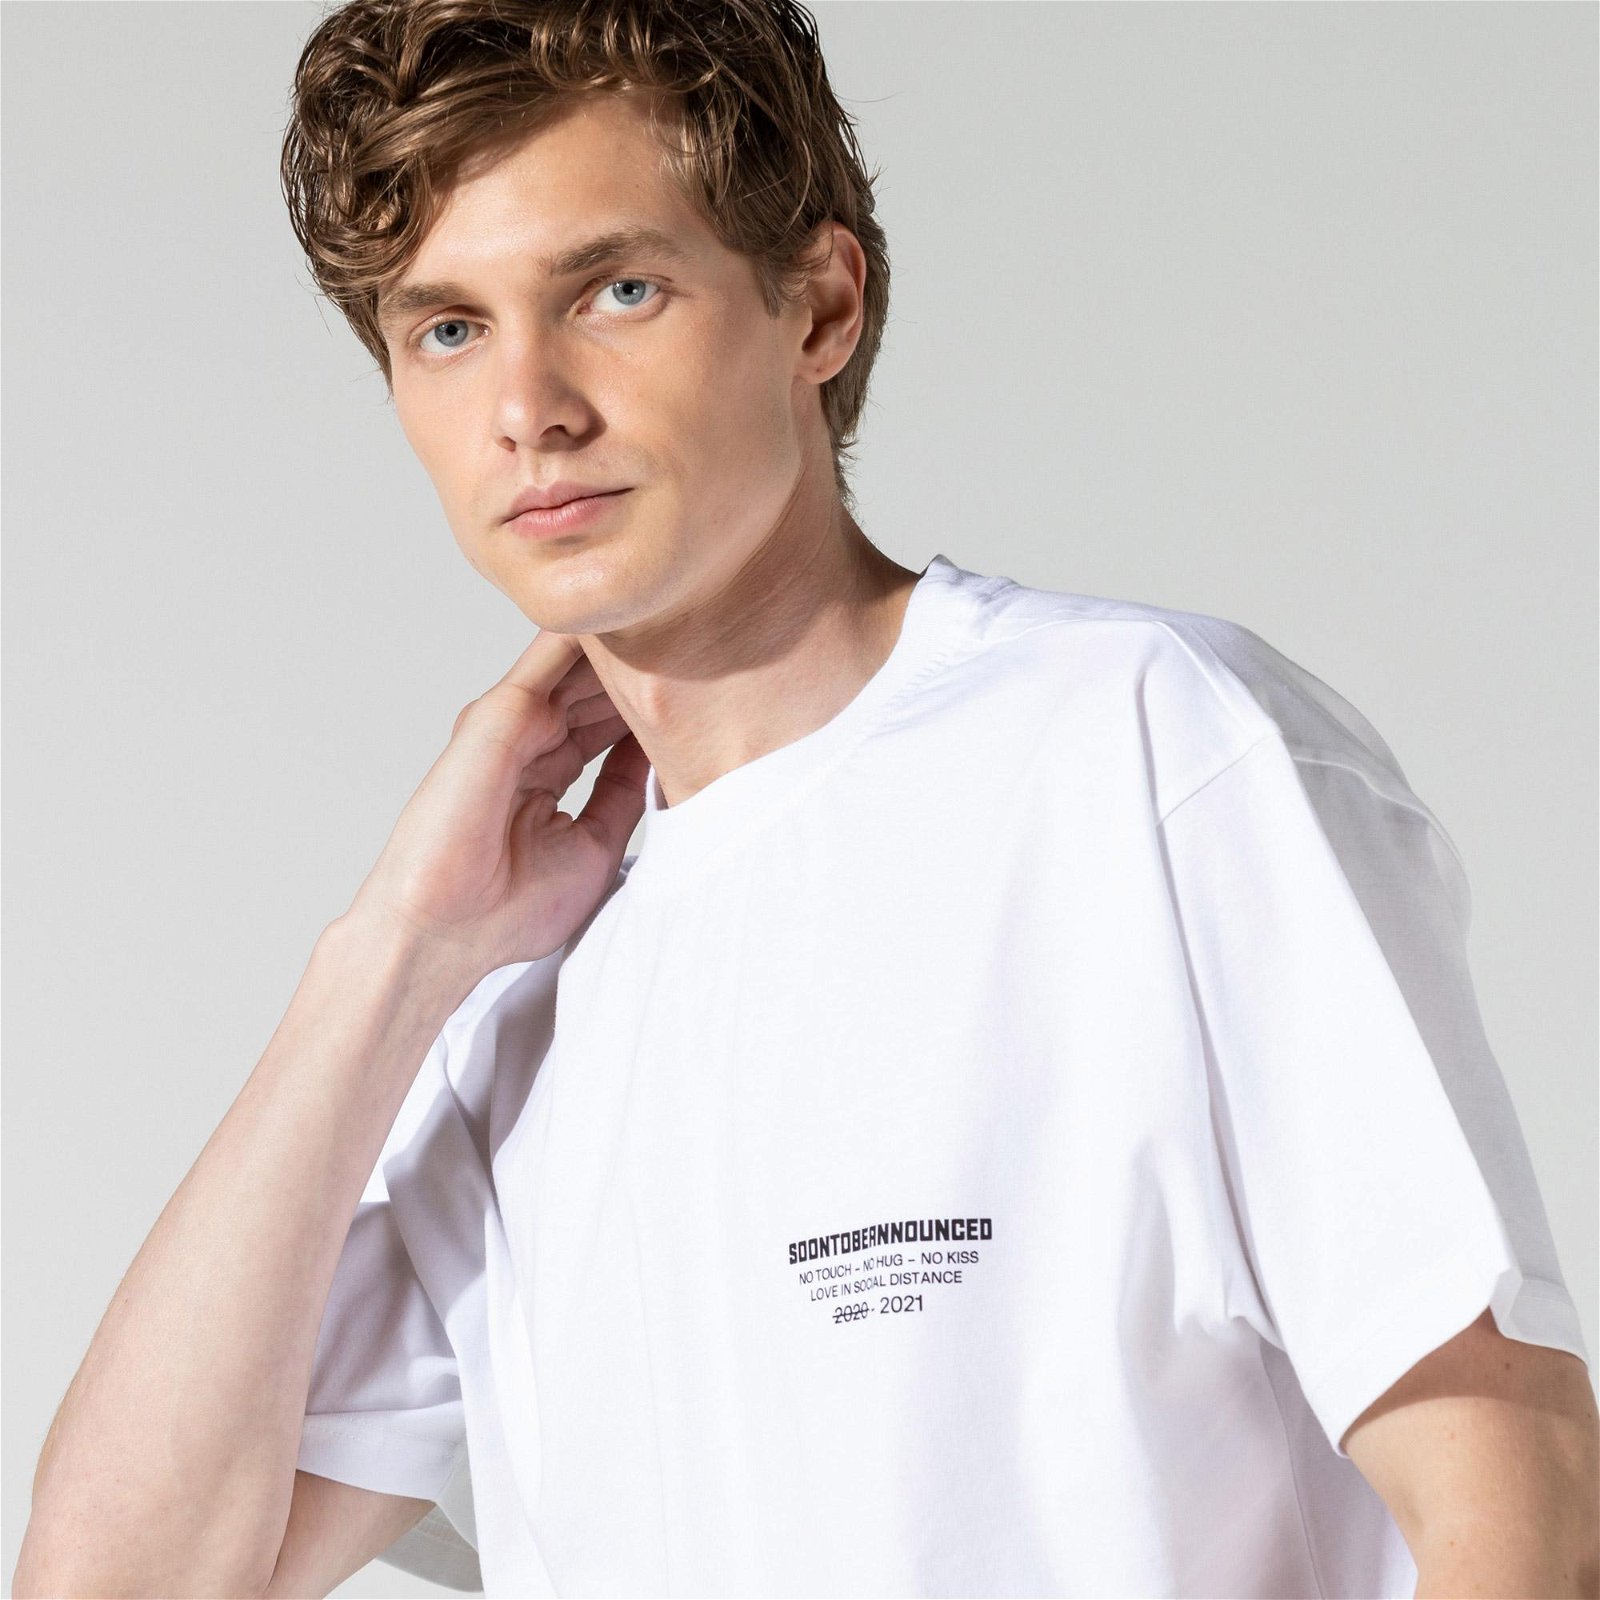 SOONTOBEANNOUNCED 2020-2021 Printed Unisex Beyaz T-Shirt